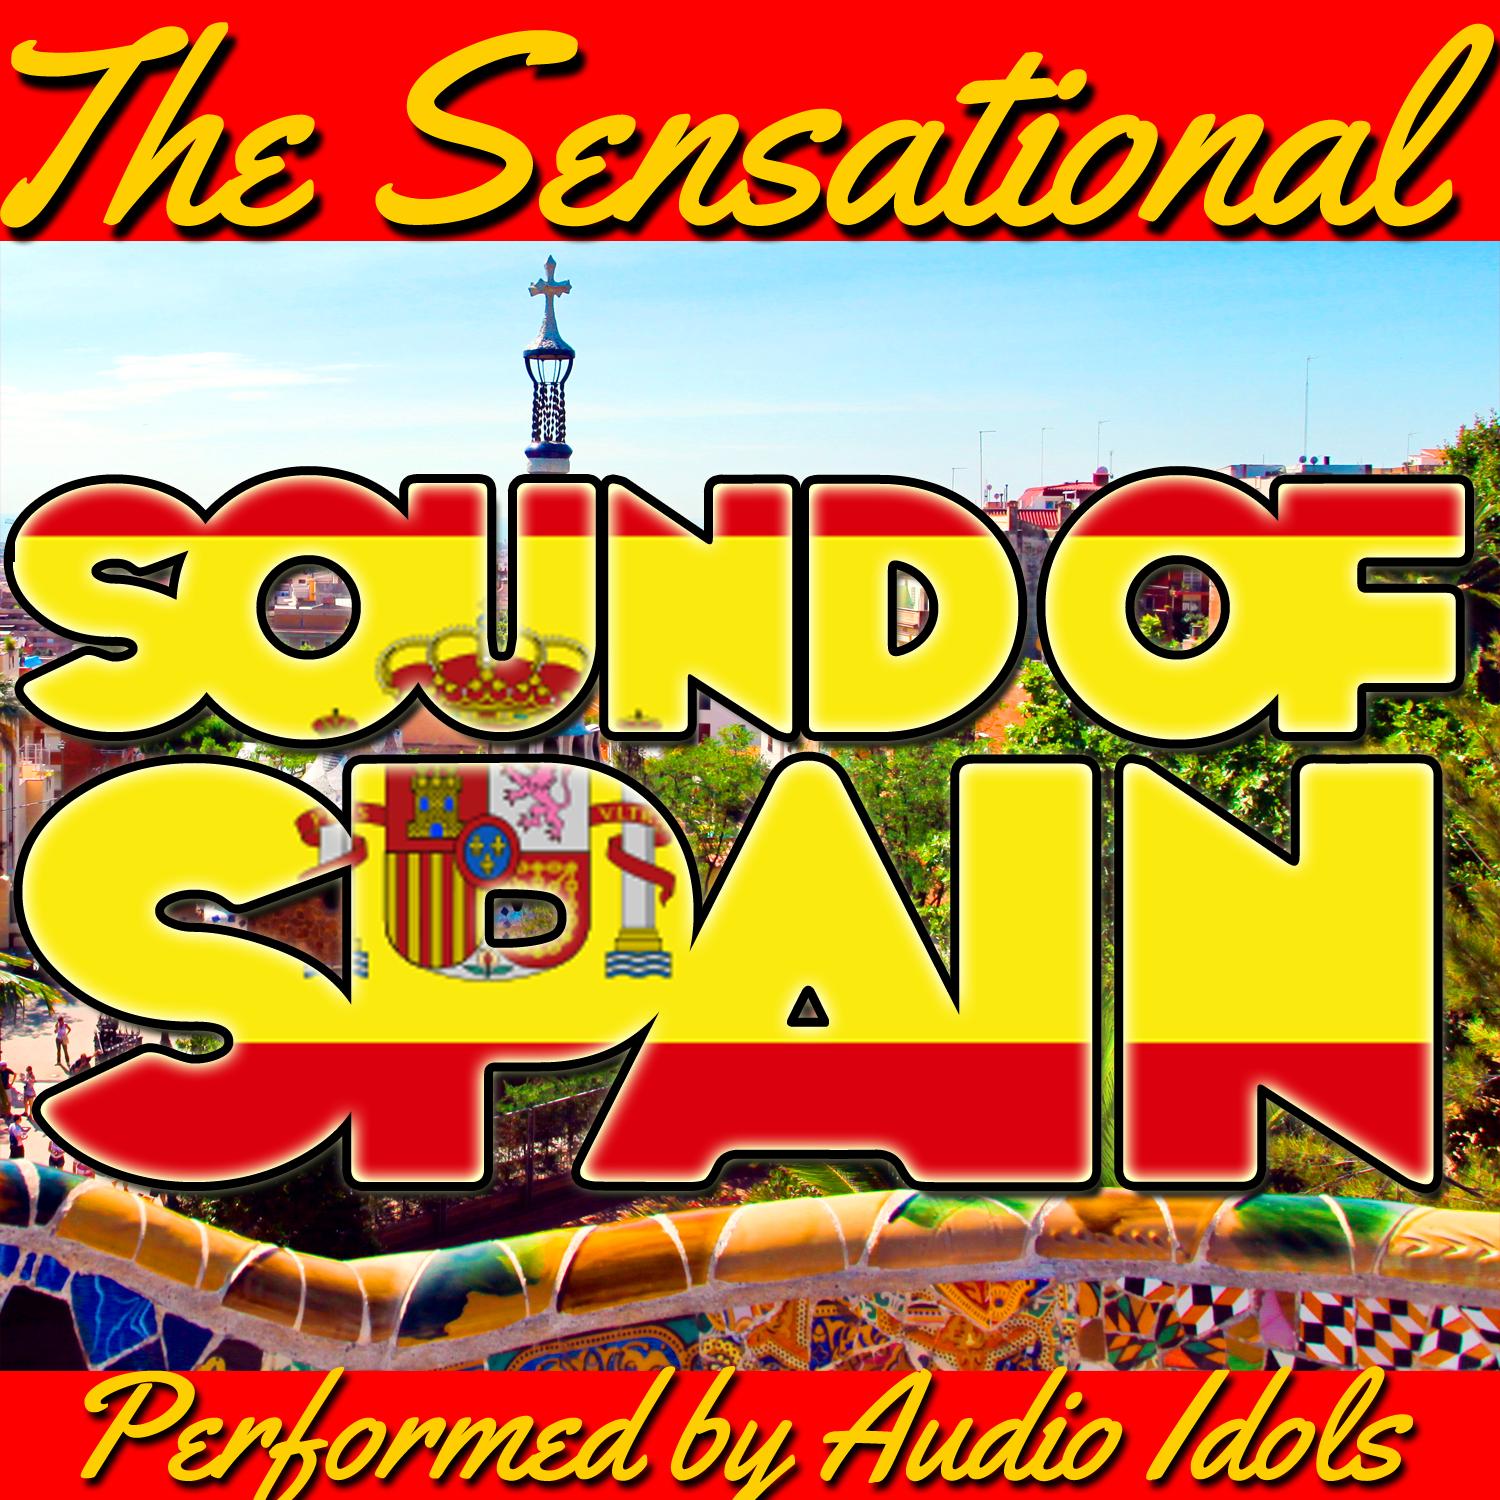 The Sensational Sound of Spain